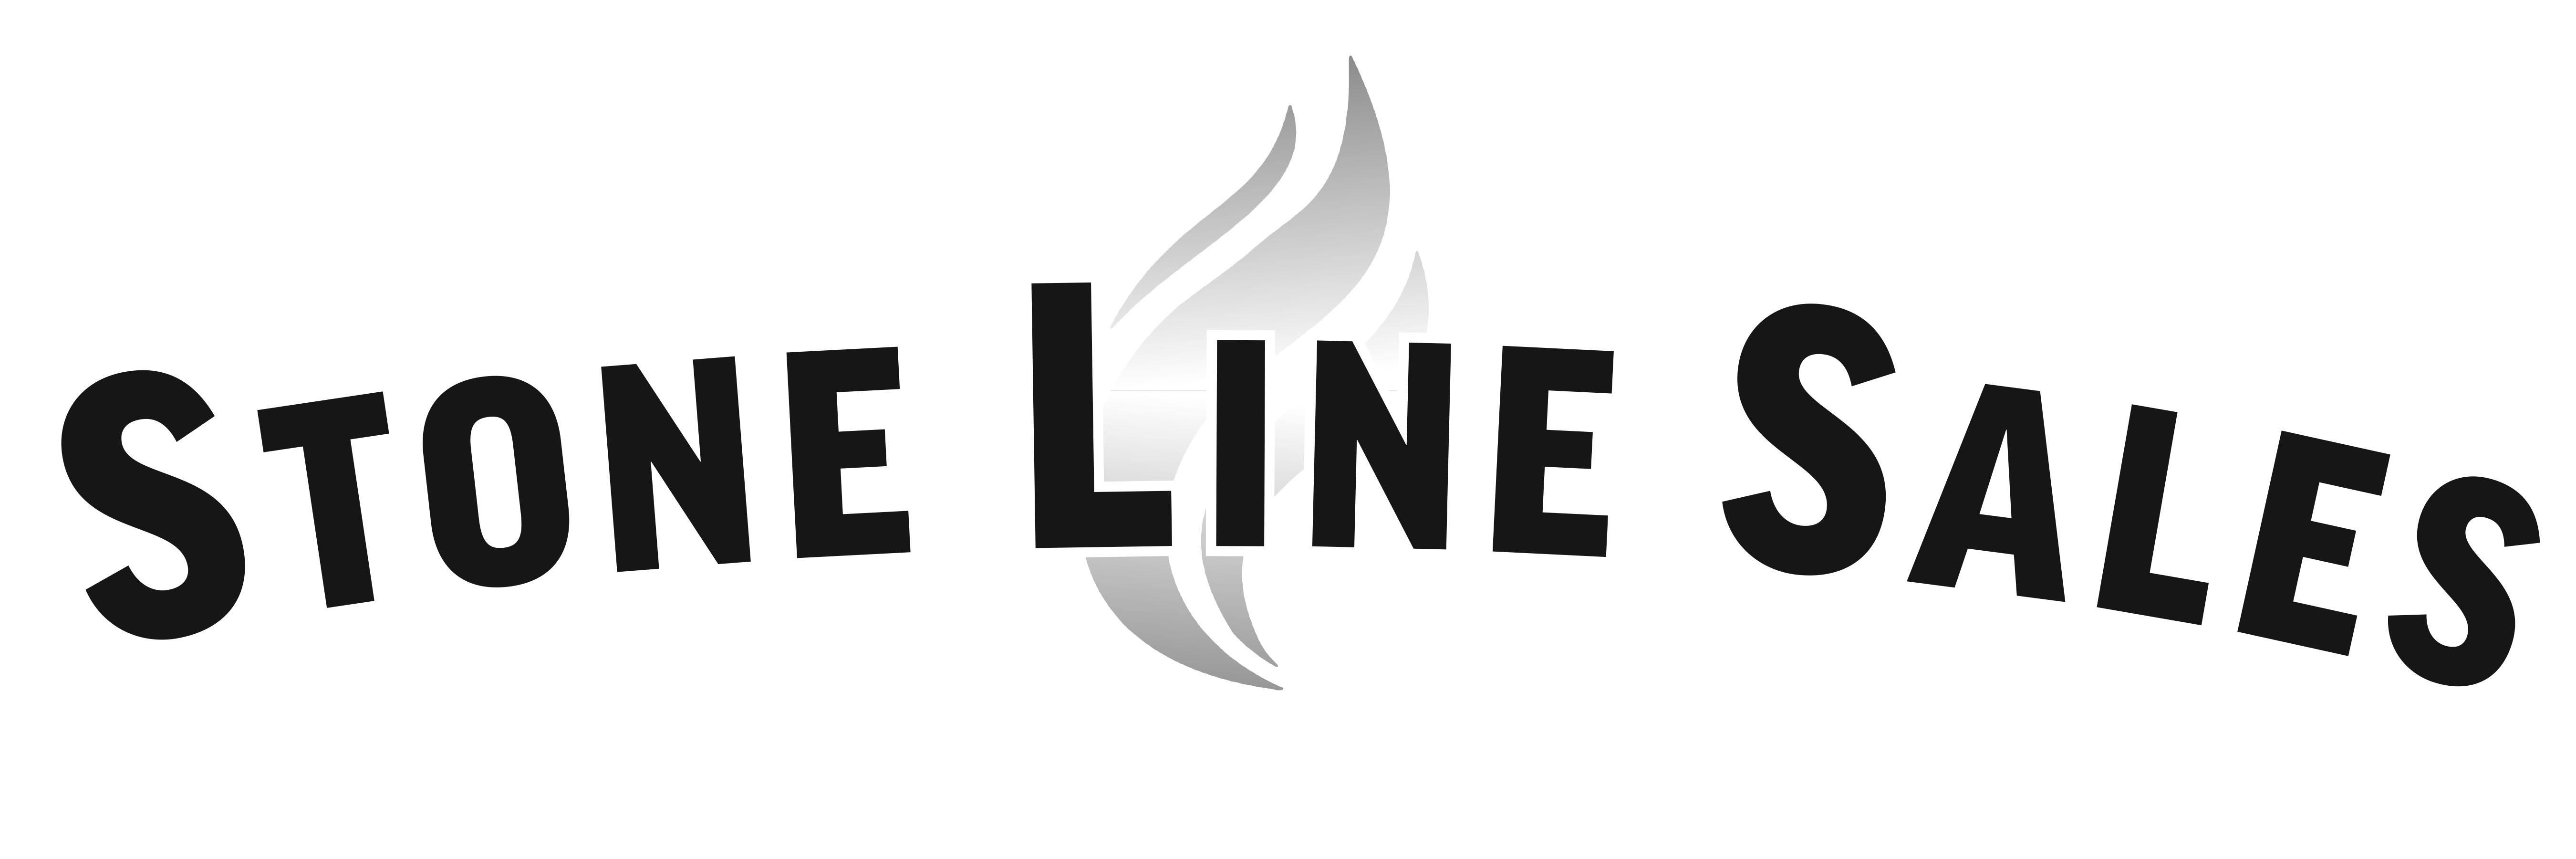 Stone Line Sales Logo